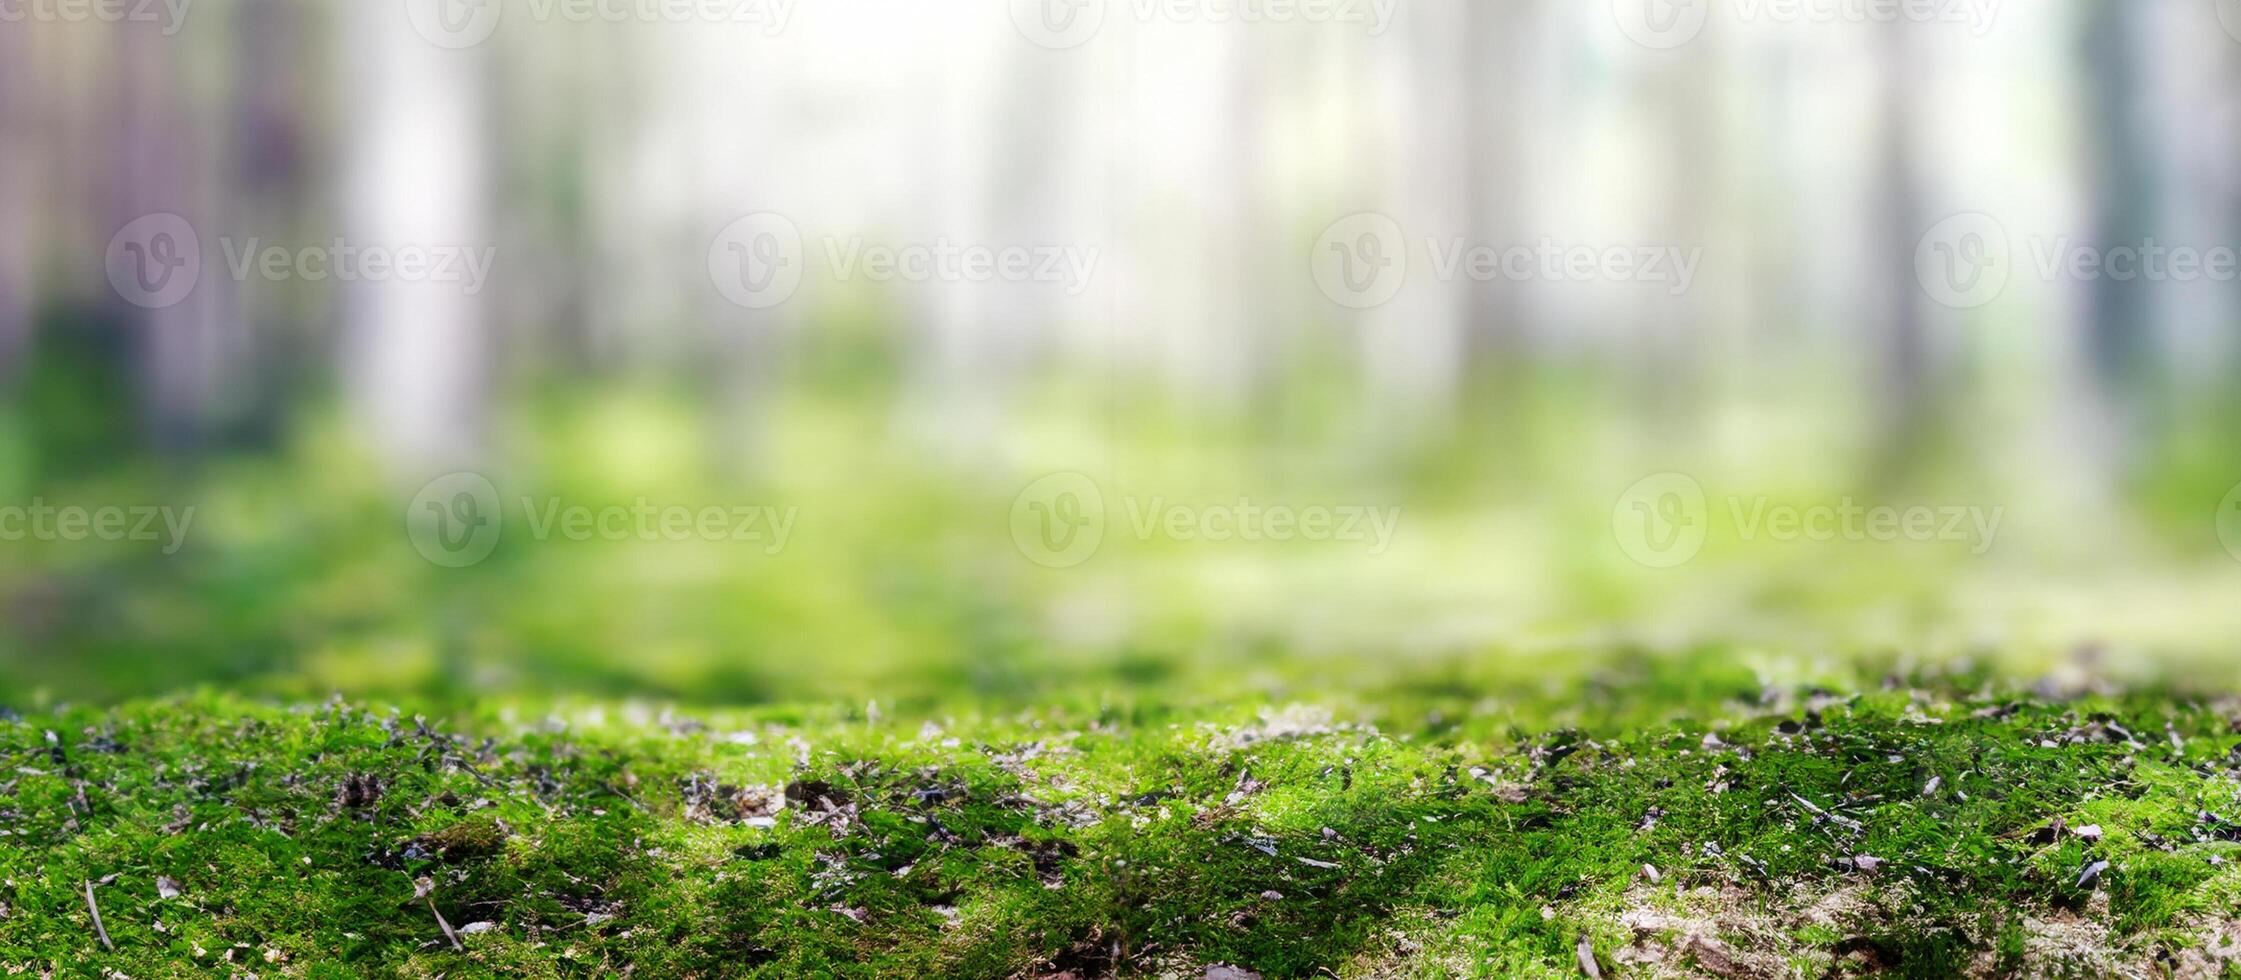 groen ecologie achtergrond foto